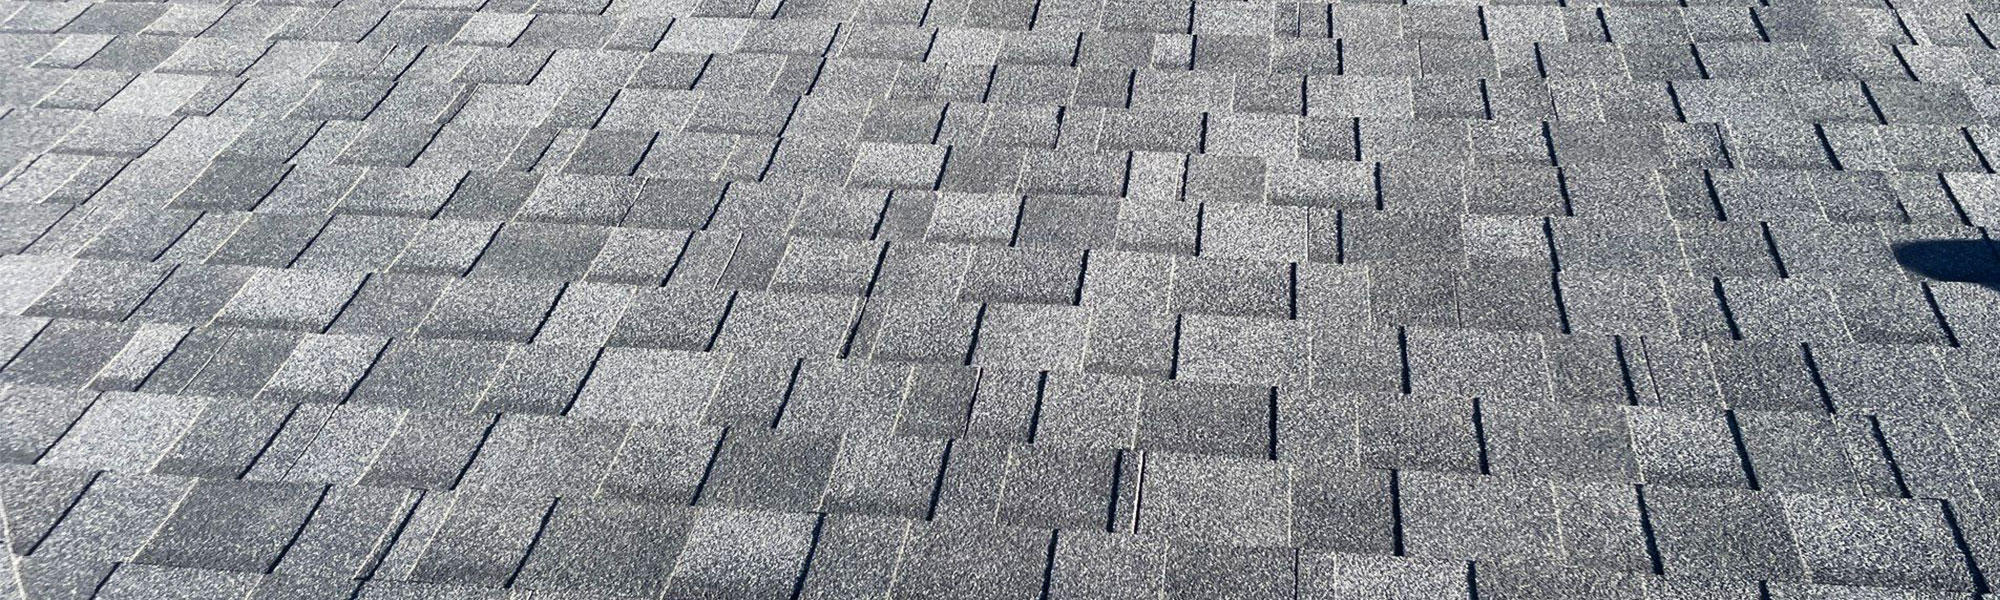 An upclose view of an asphalt shingle roof